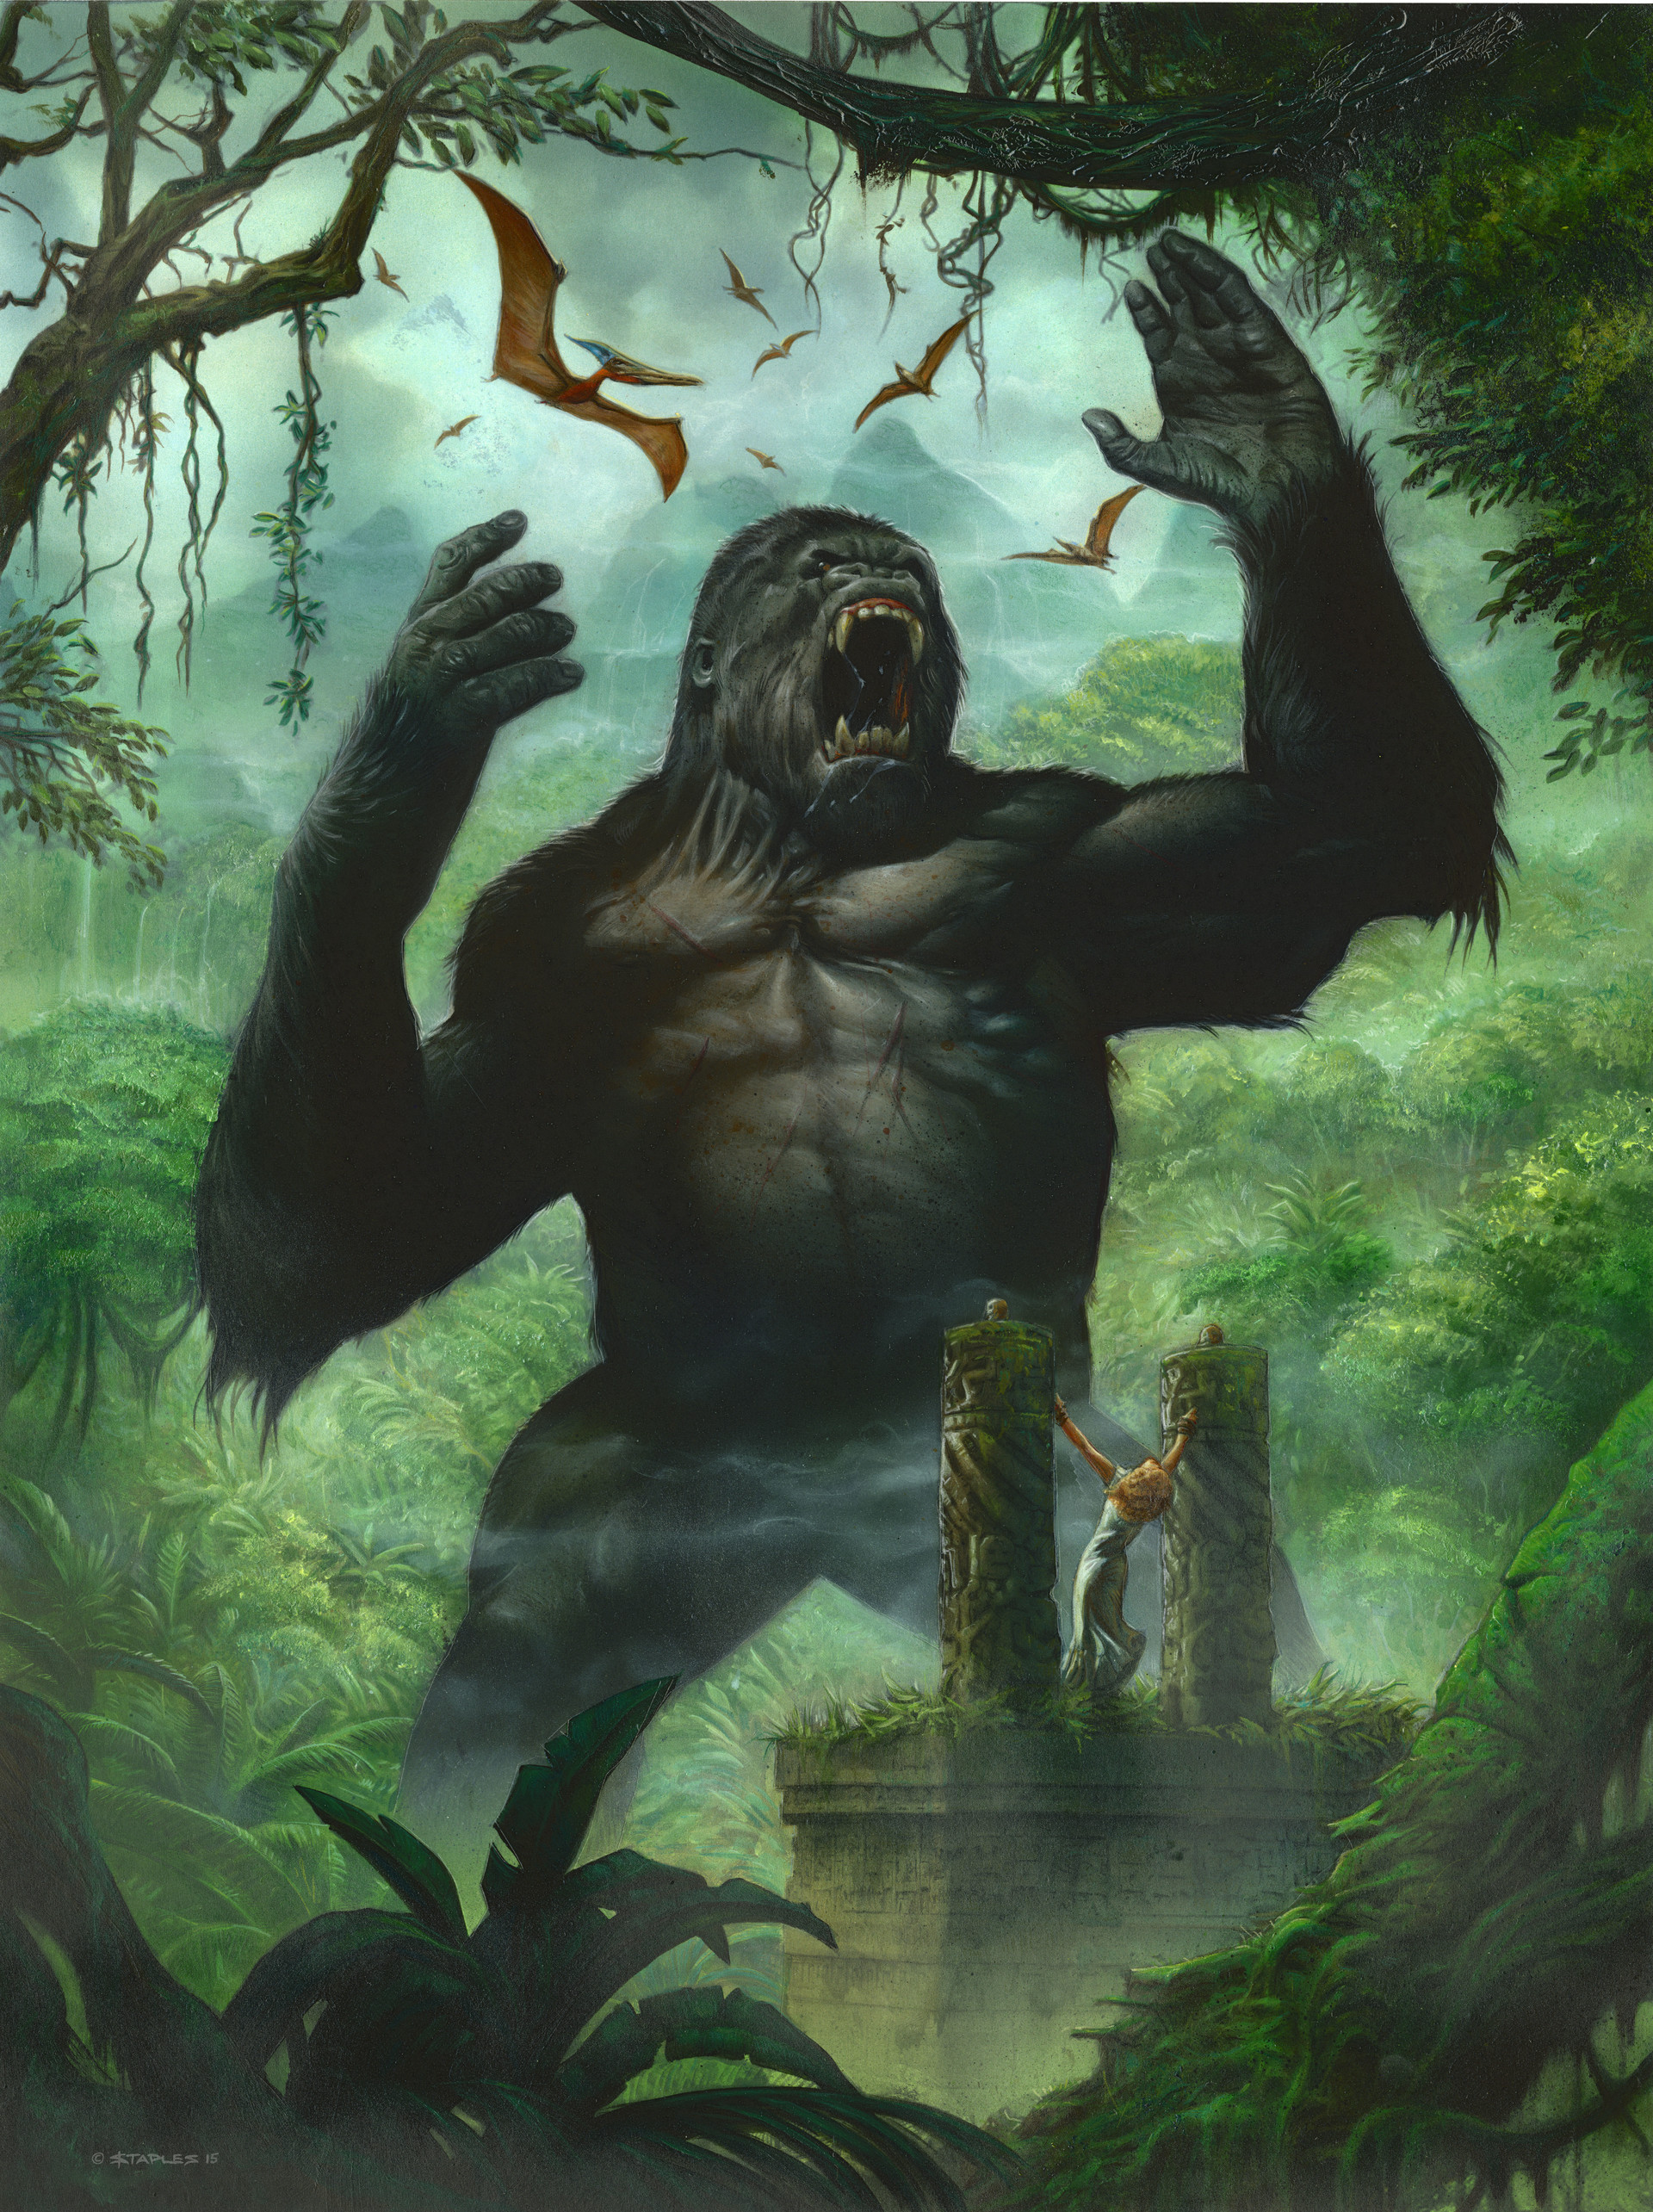 King Kong (2005) Art by Greg Staples